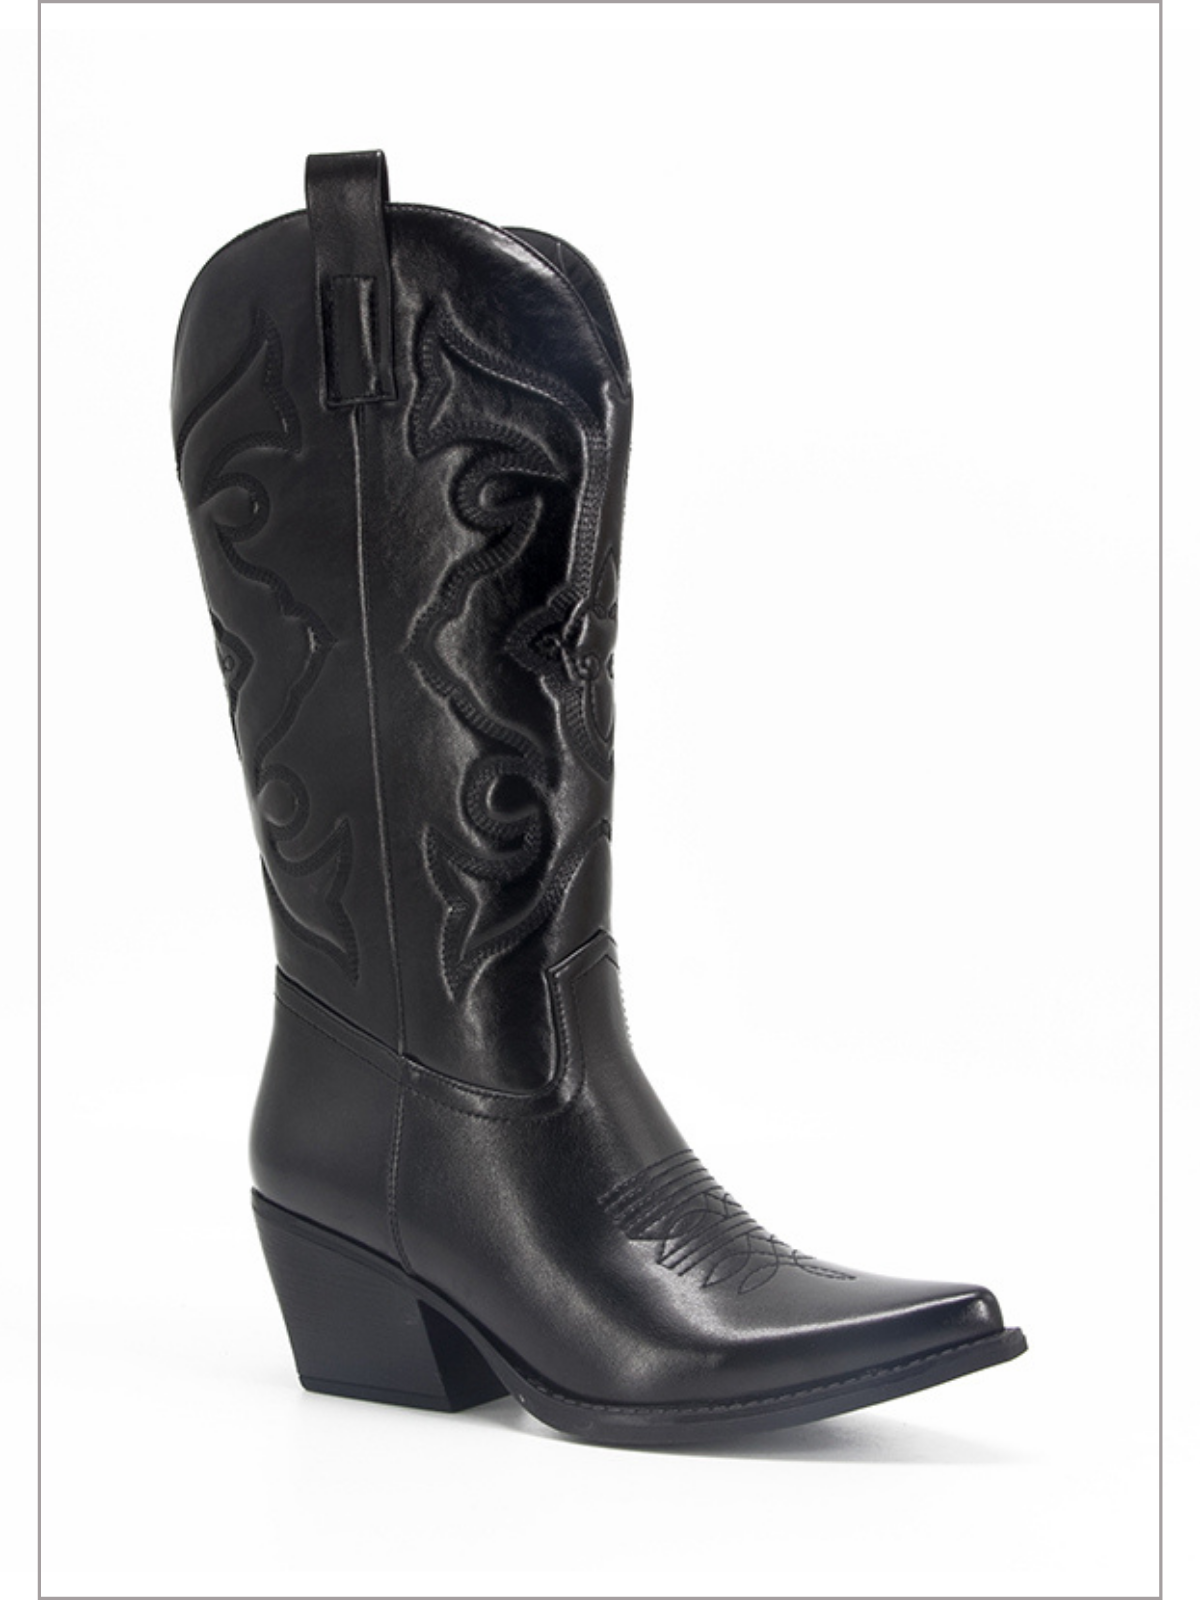 Mia Belle Girls Heeled Cowboy Boots | Women's Shoes